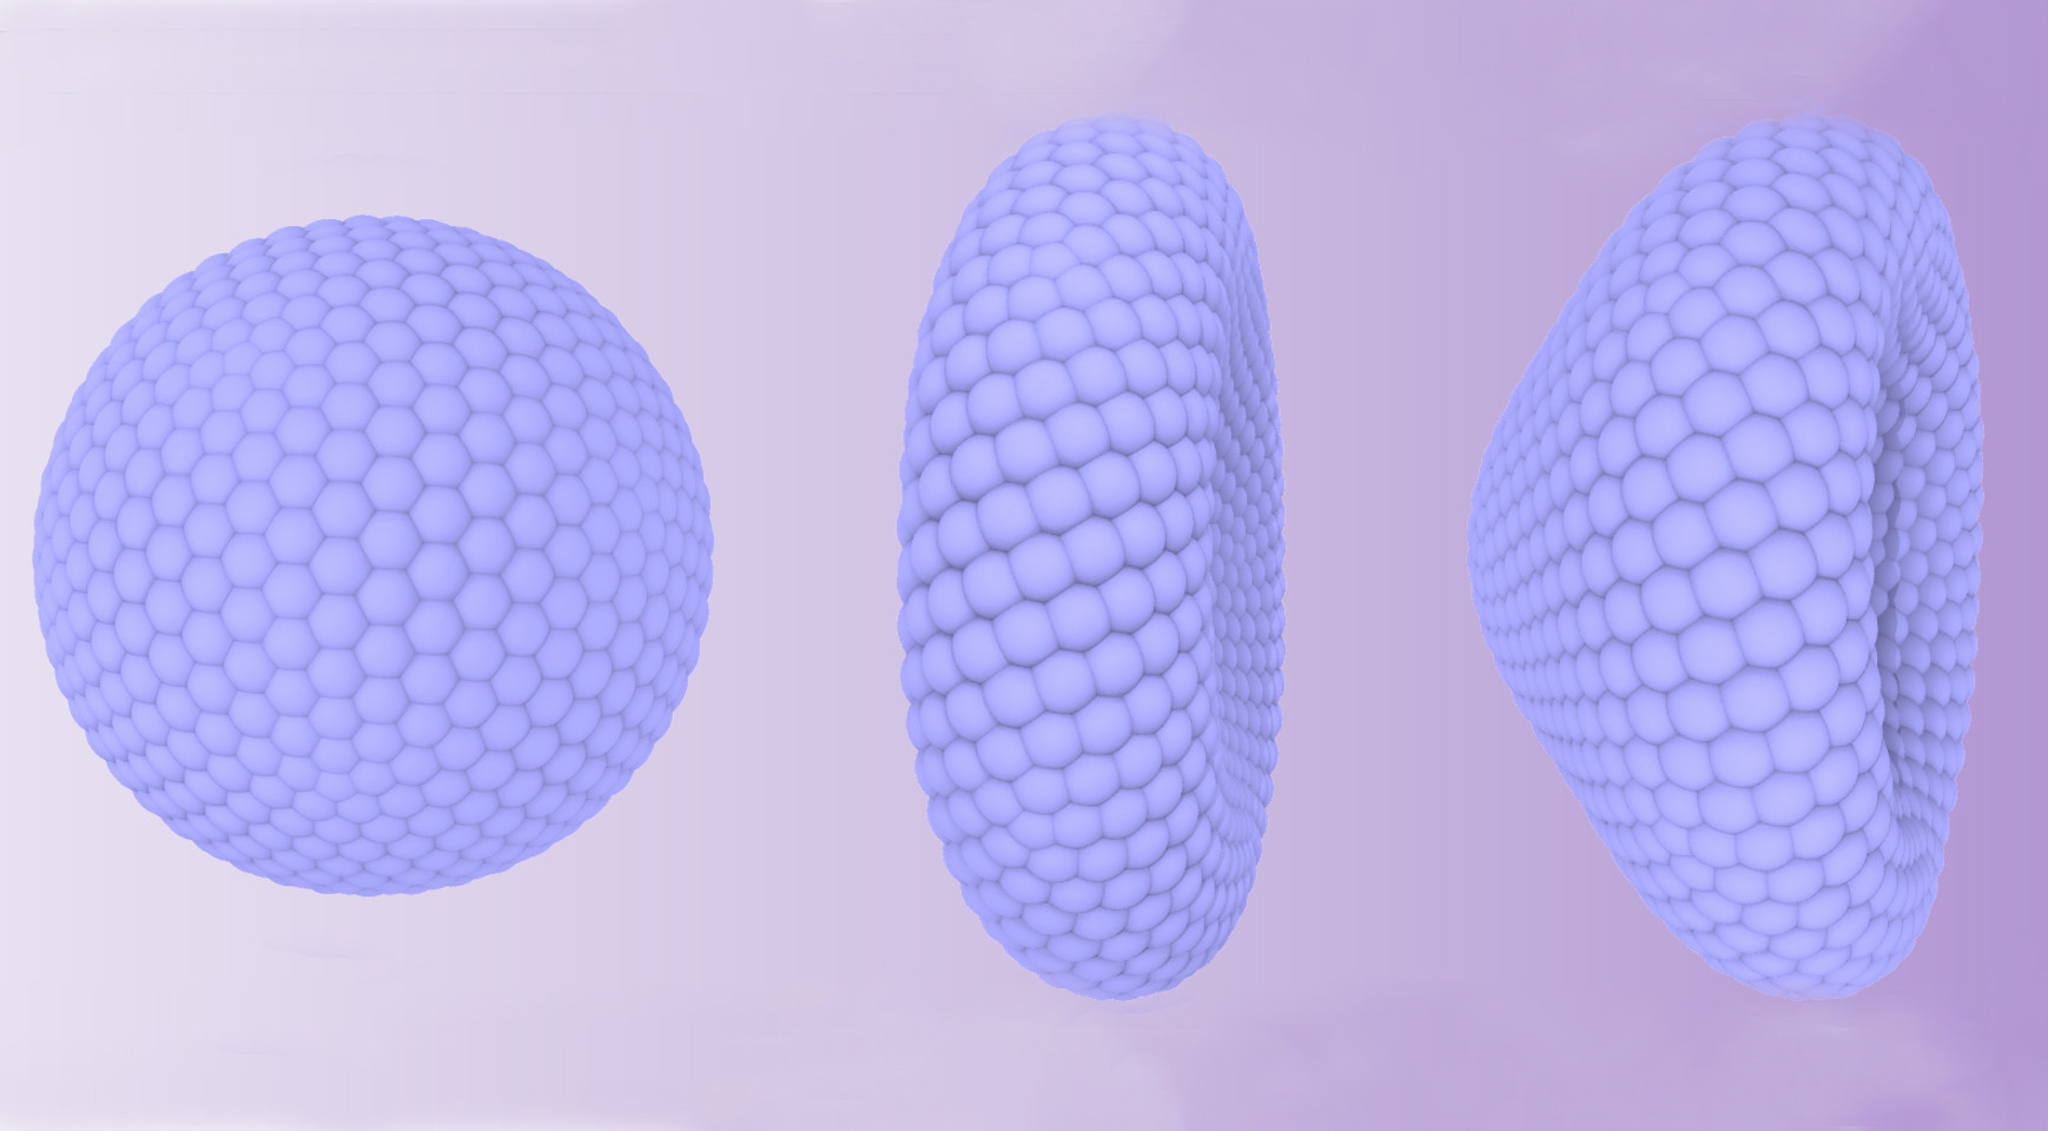 Nanodevices change shape